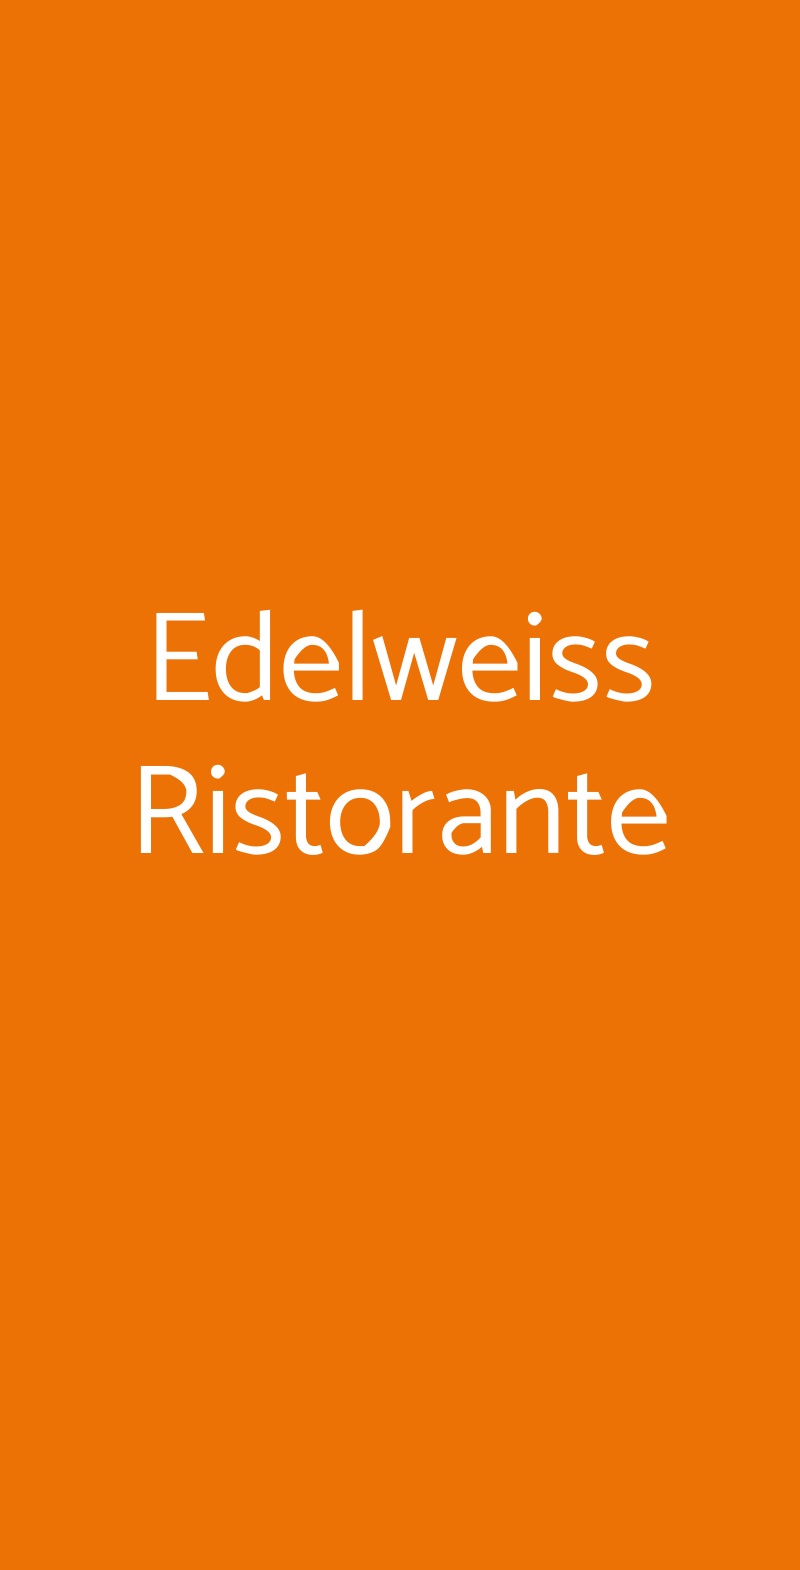 Edelweiss Ristorante Sestriere menù 1 pagina